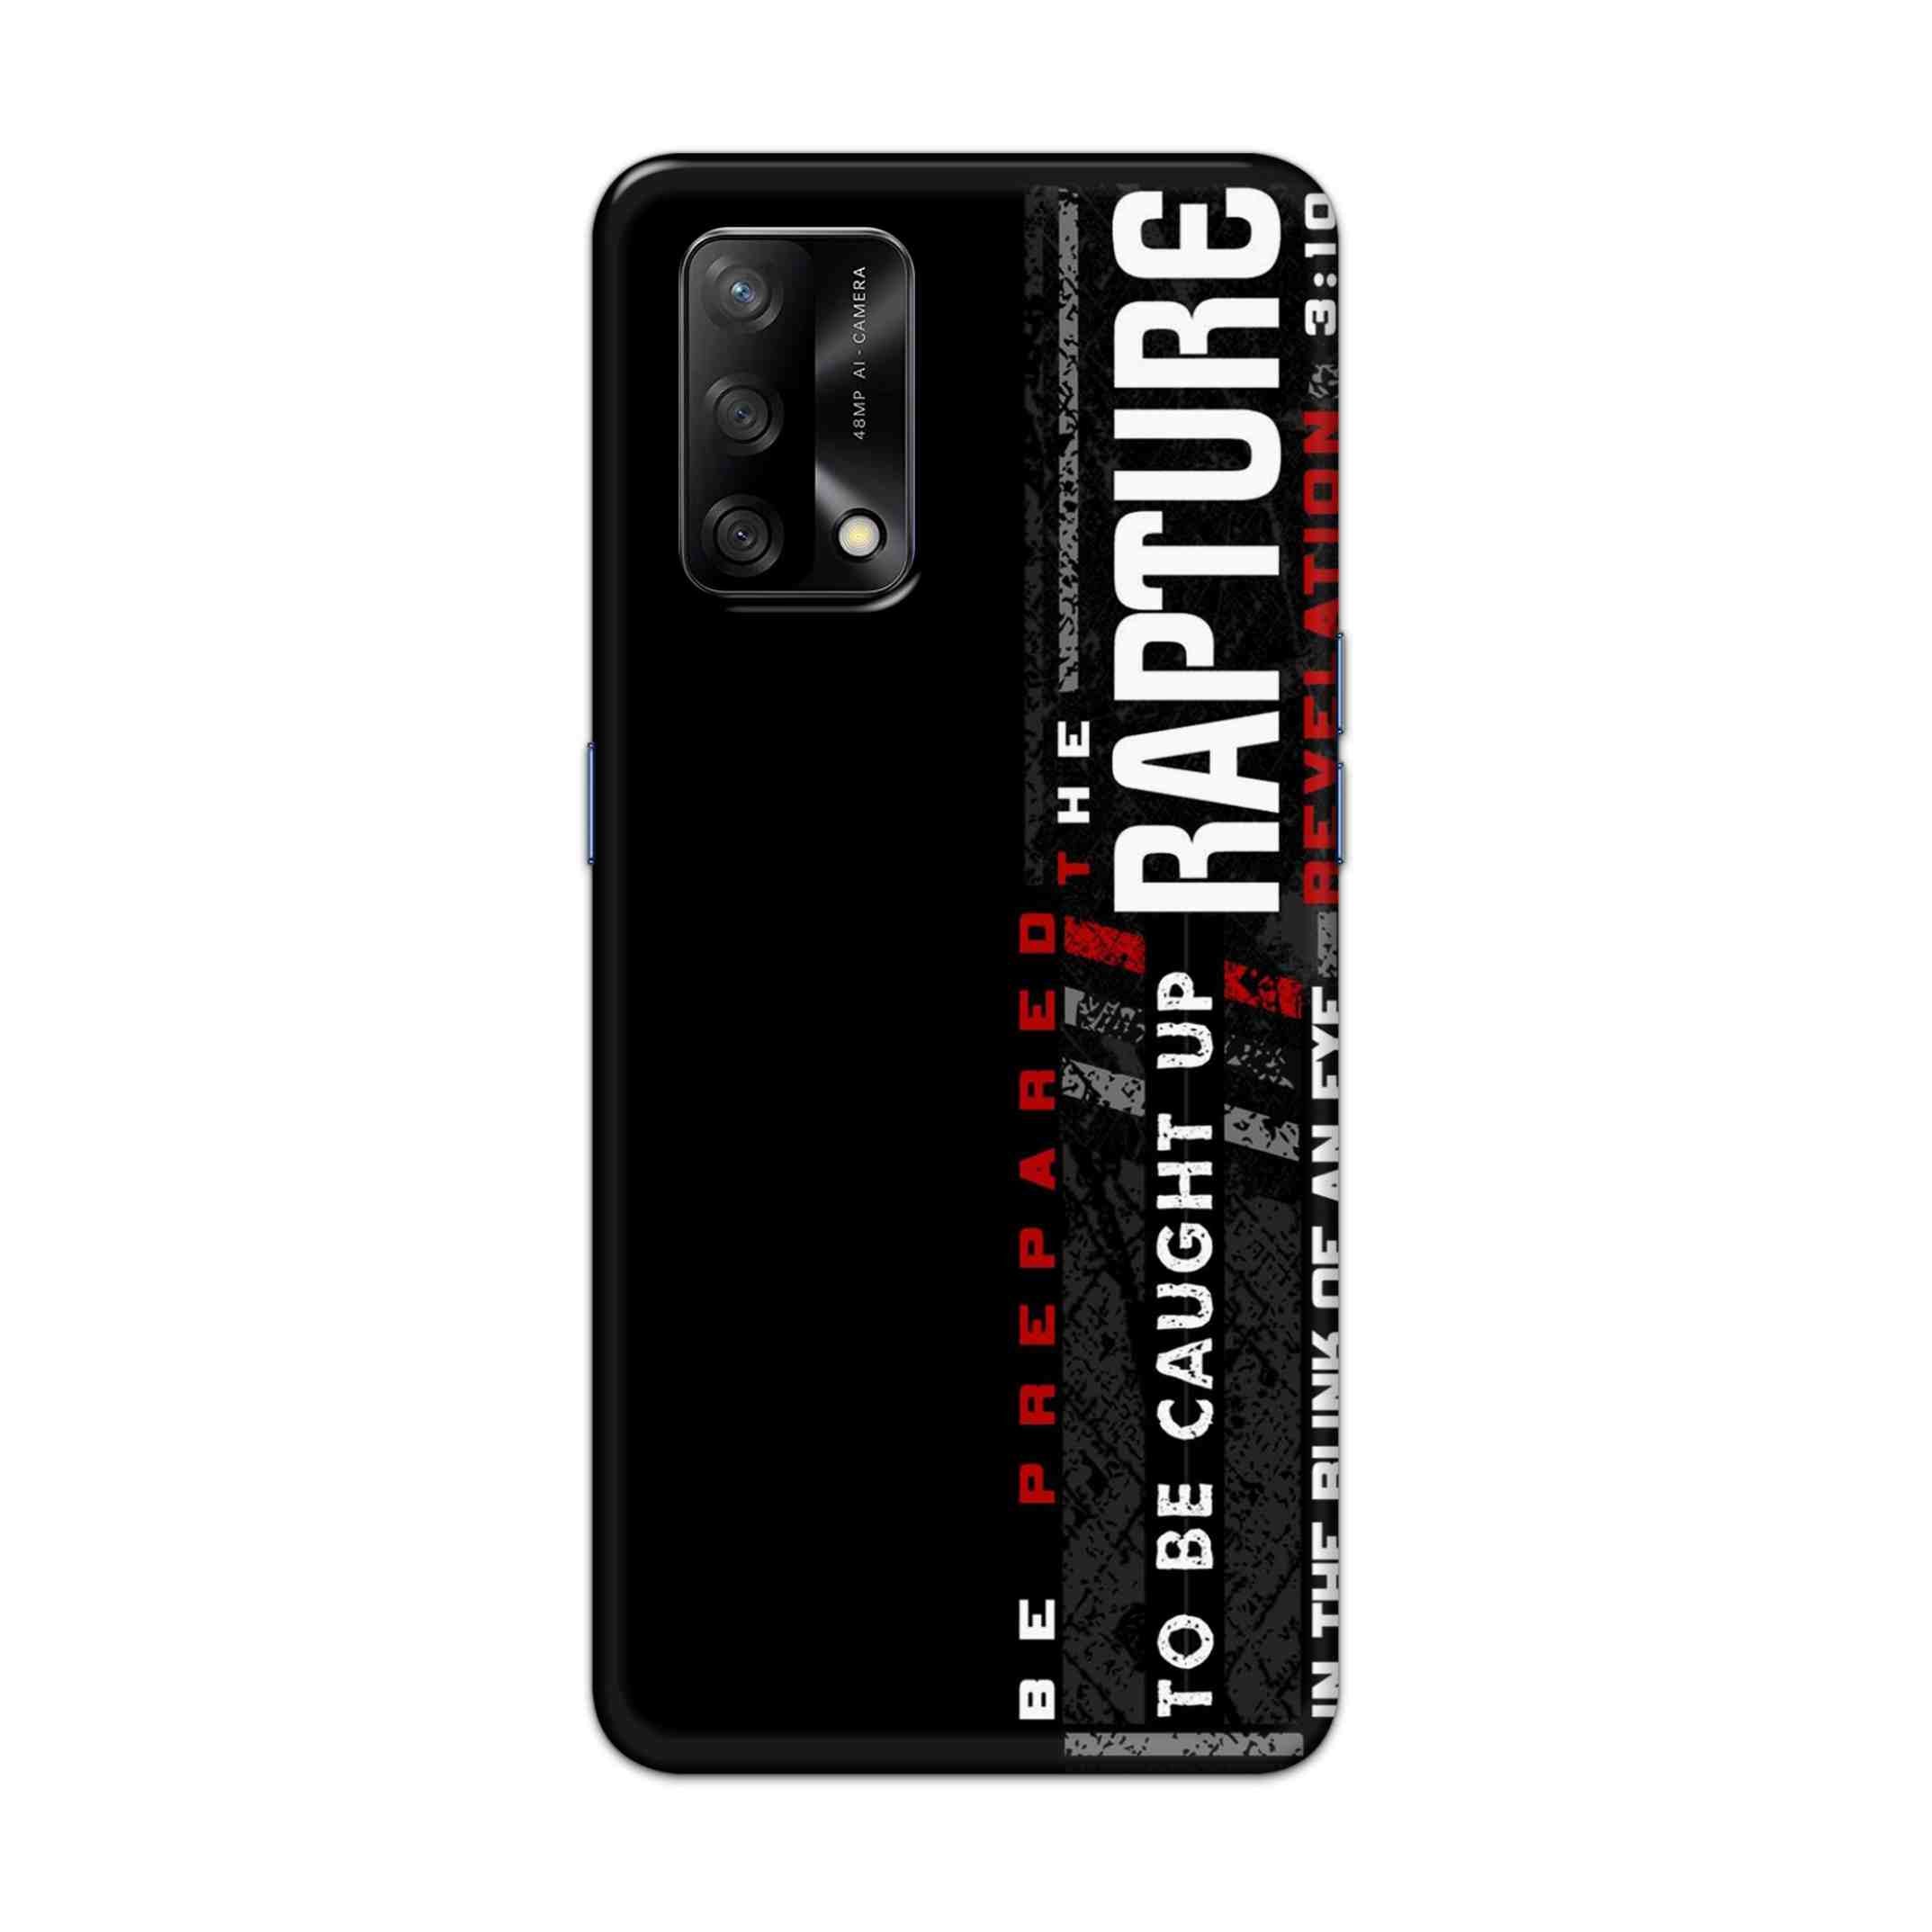 Buy Rapture Hard Back Mobile Phone Case Cover For Oppo F19 Online